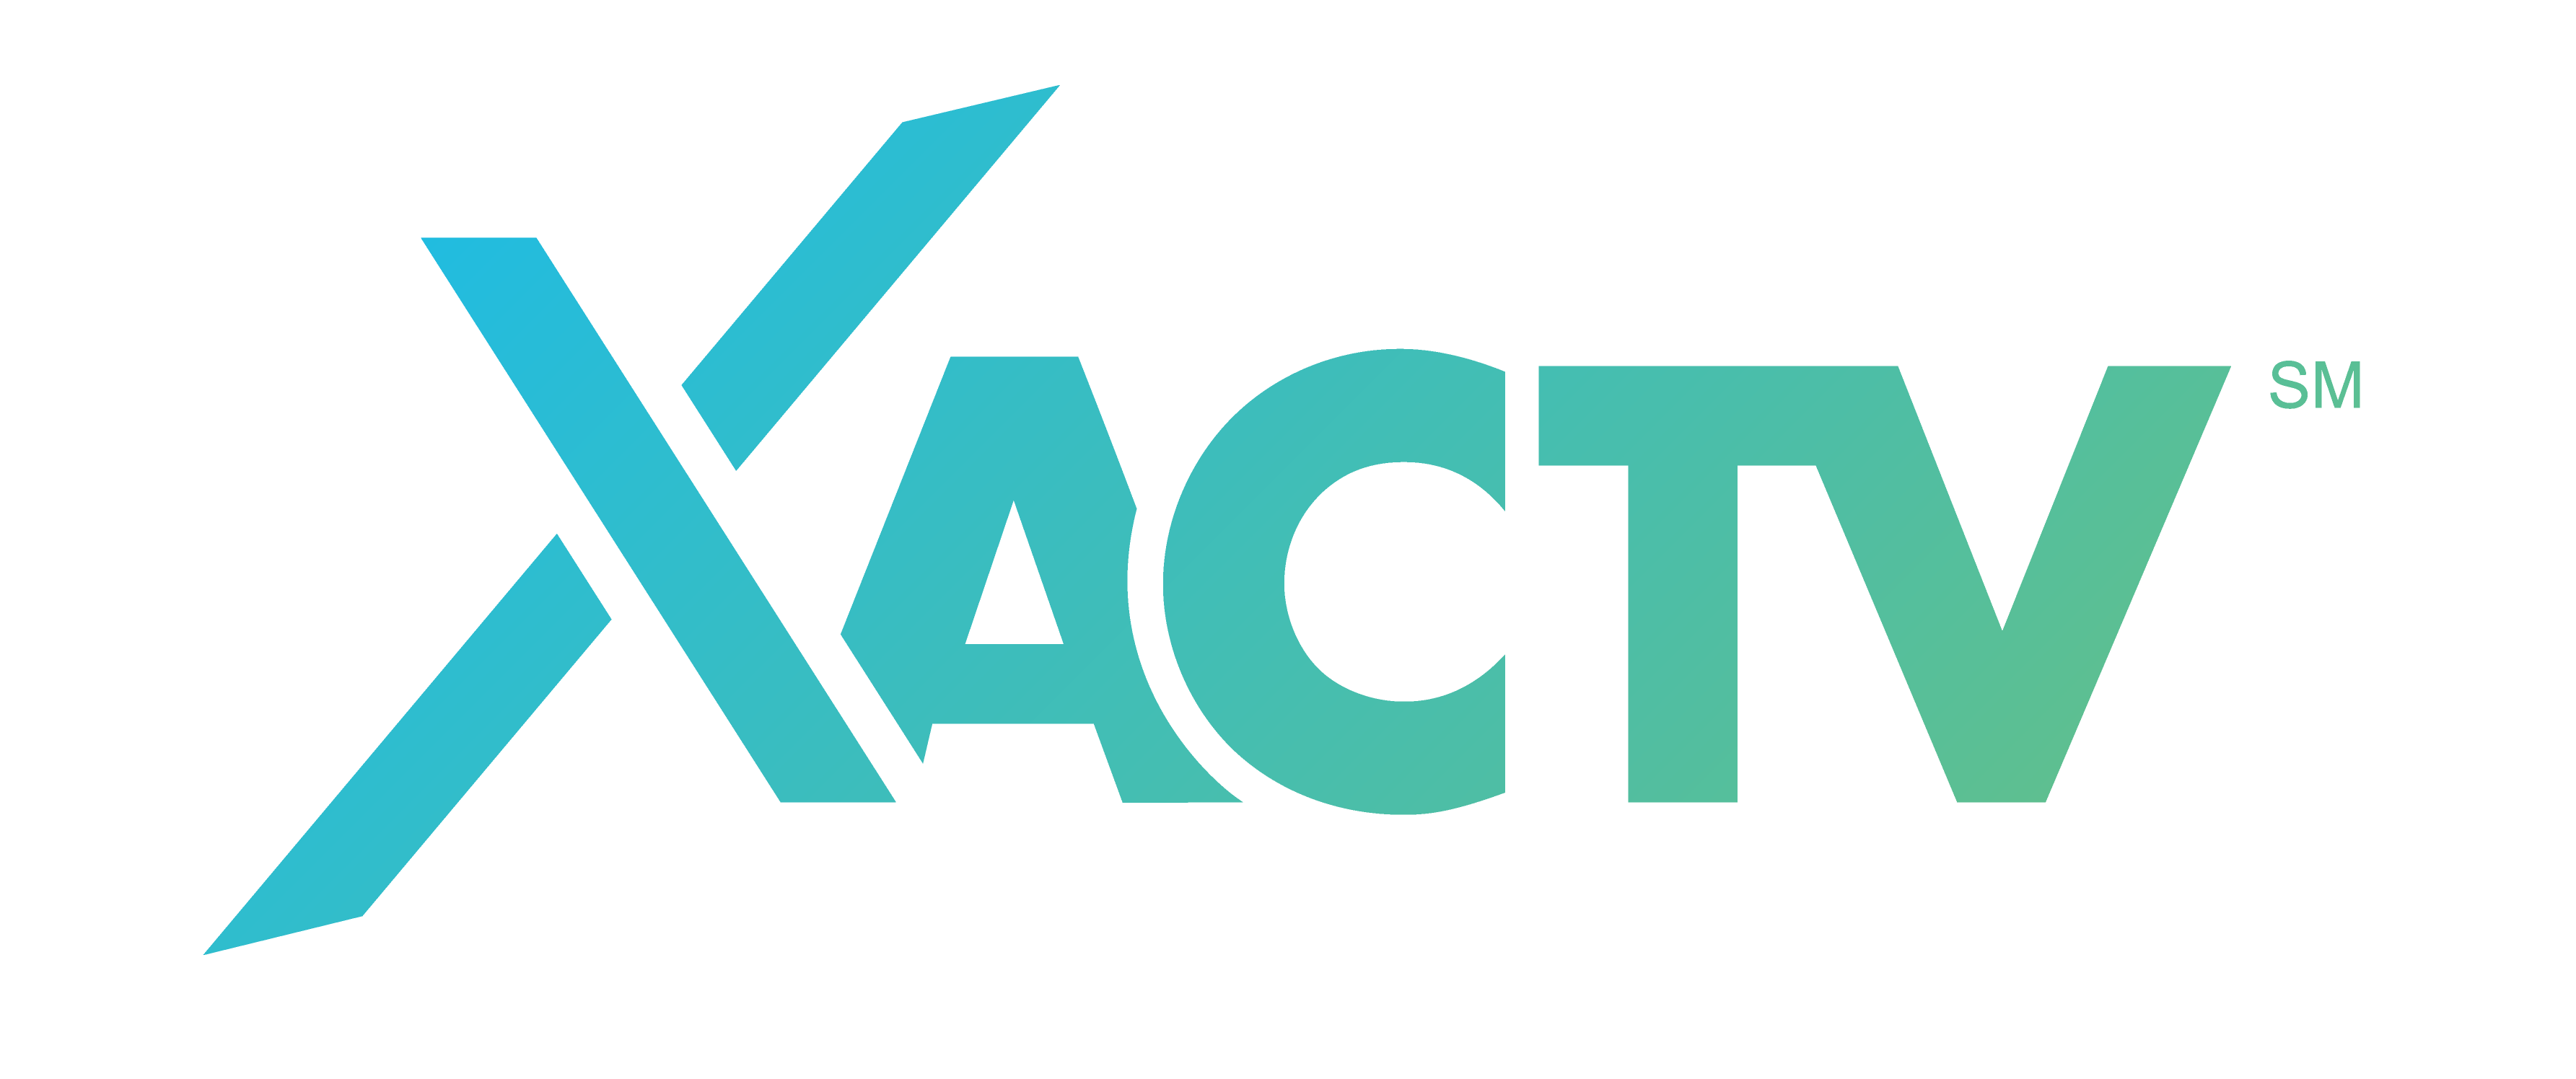 XACTV InSites logo